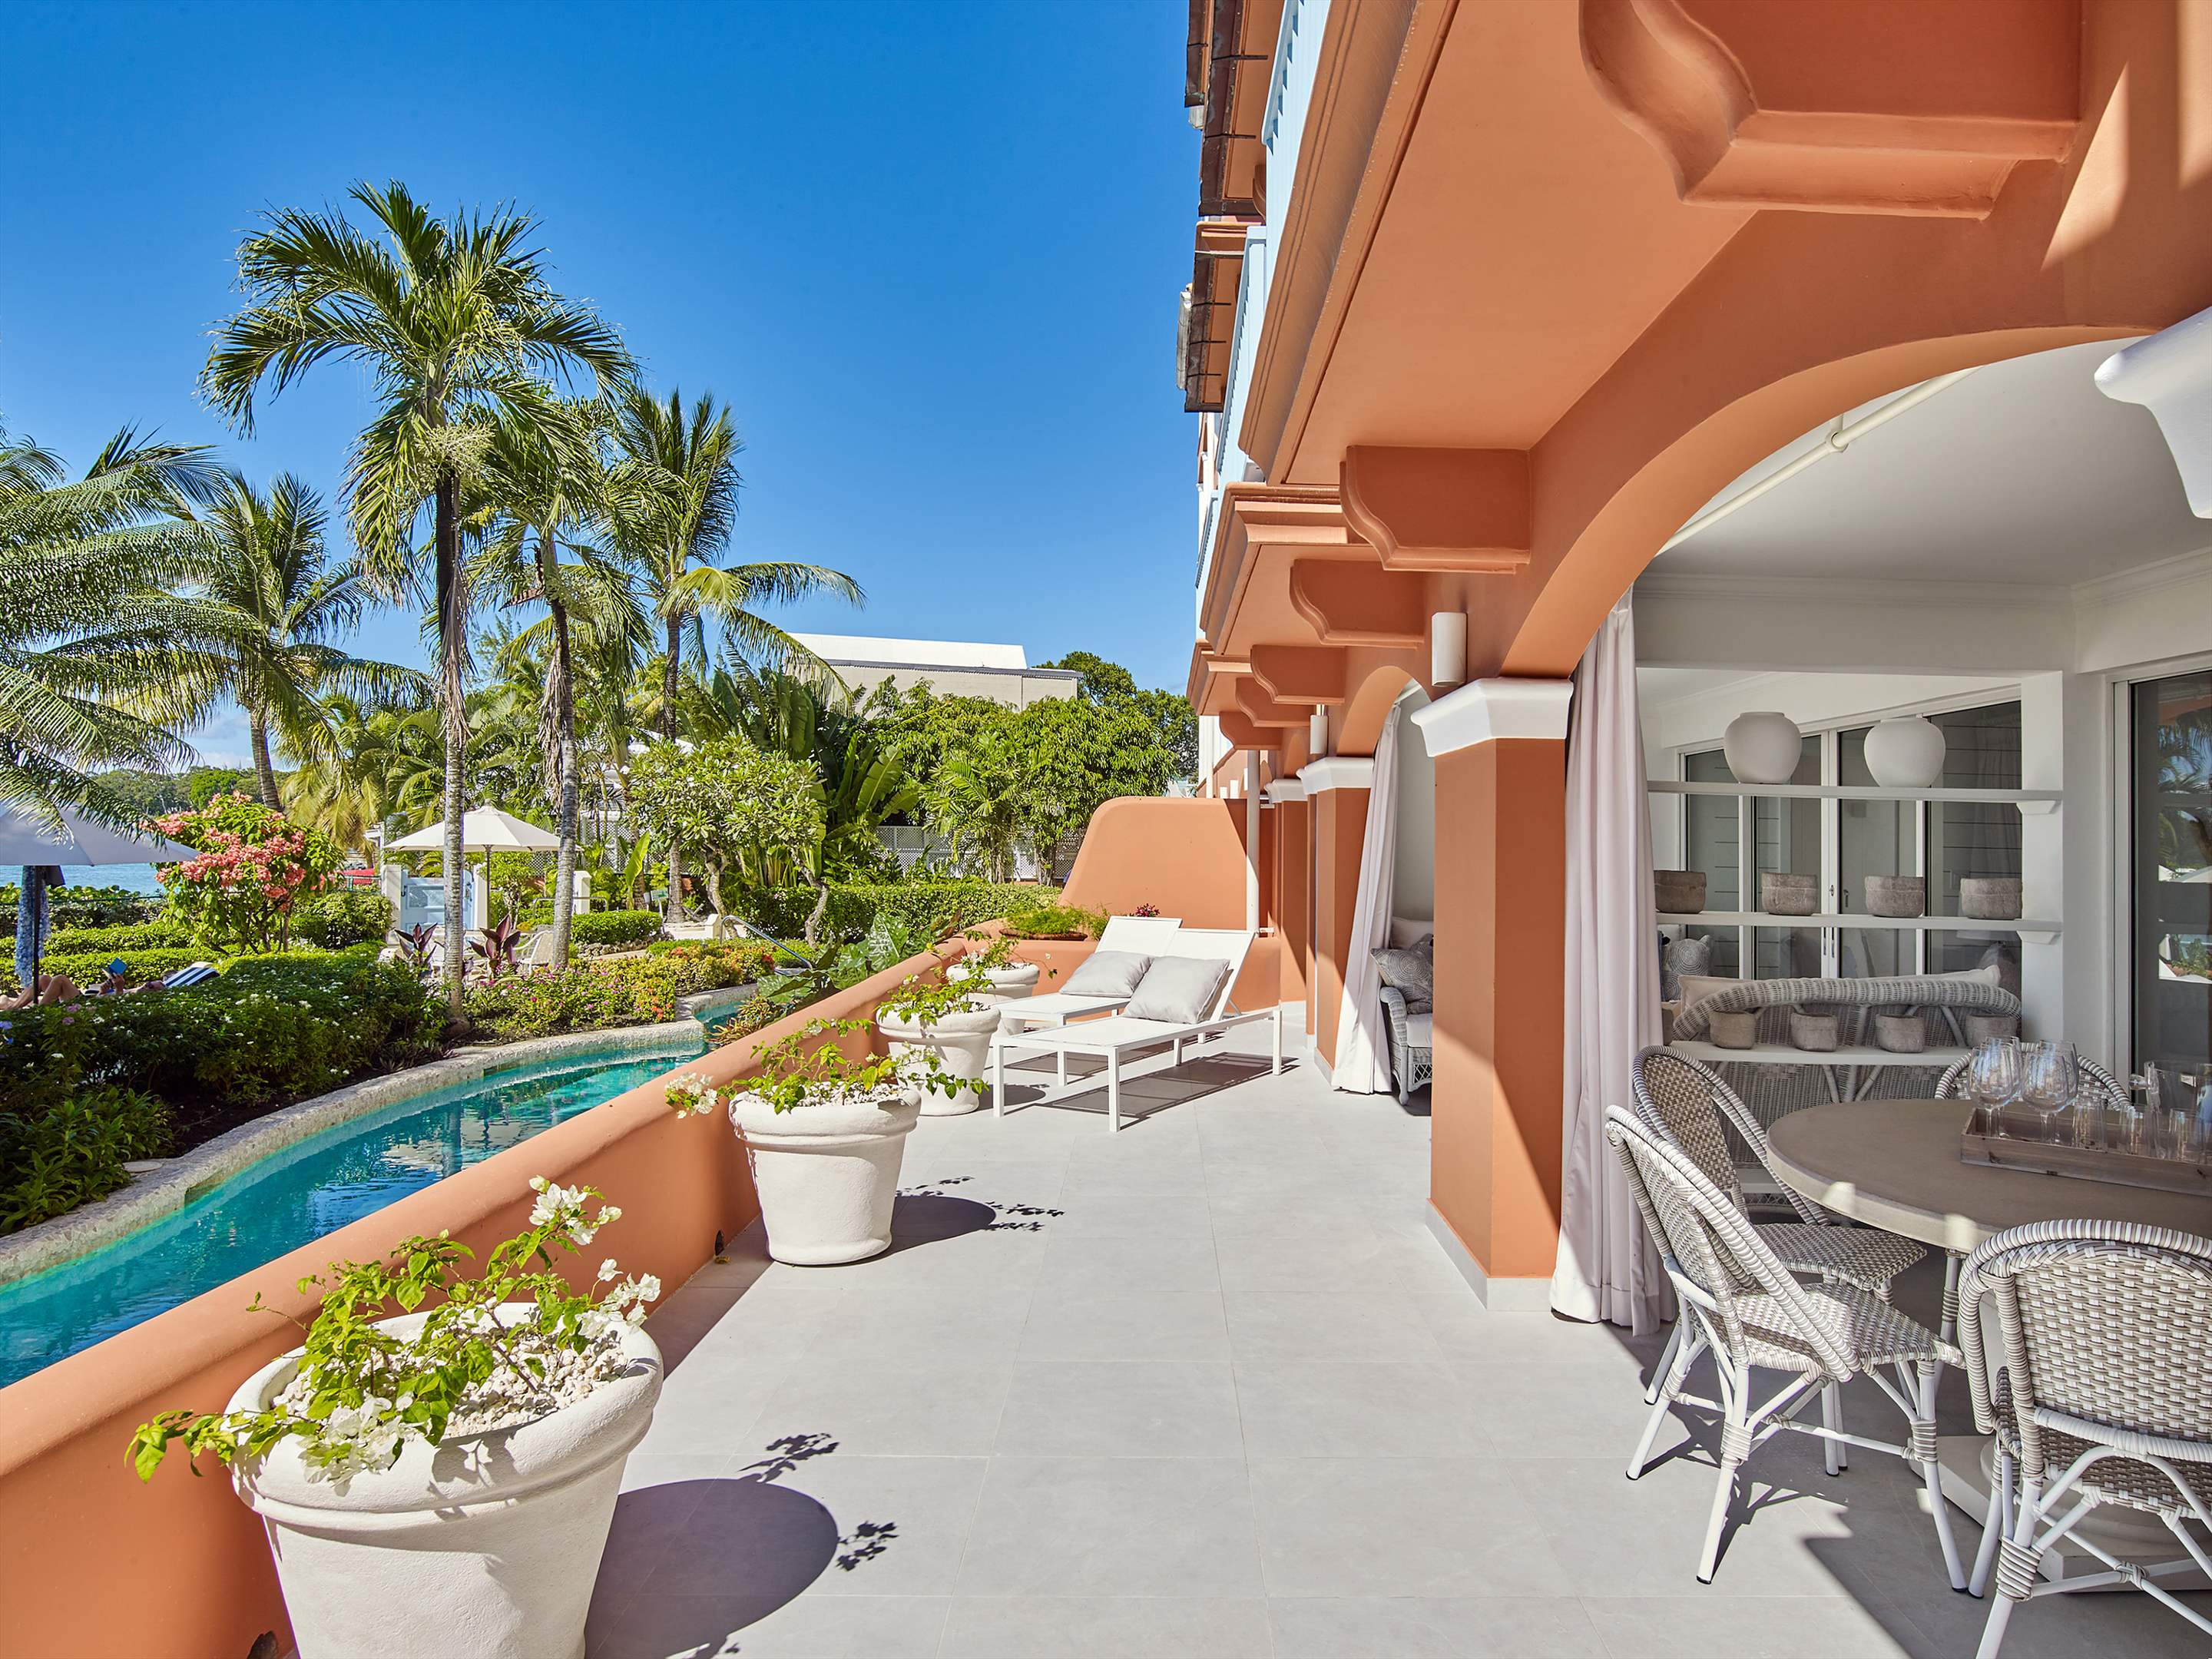 Villas on the Beach 102 , 3 bedroom, 3 bedroom apartment in St. James & West Coast, Barbados Photo #8